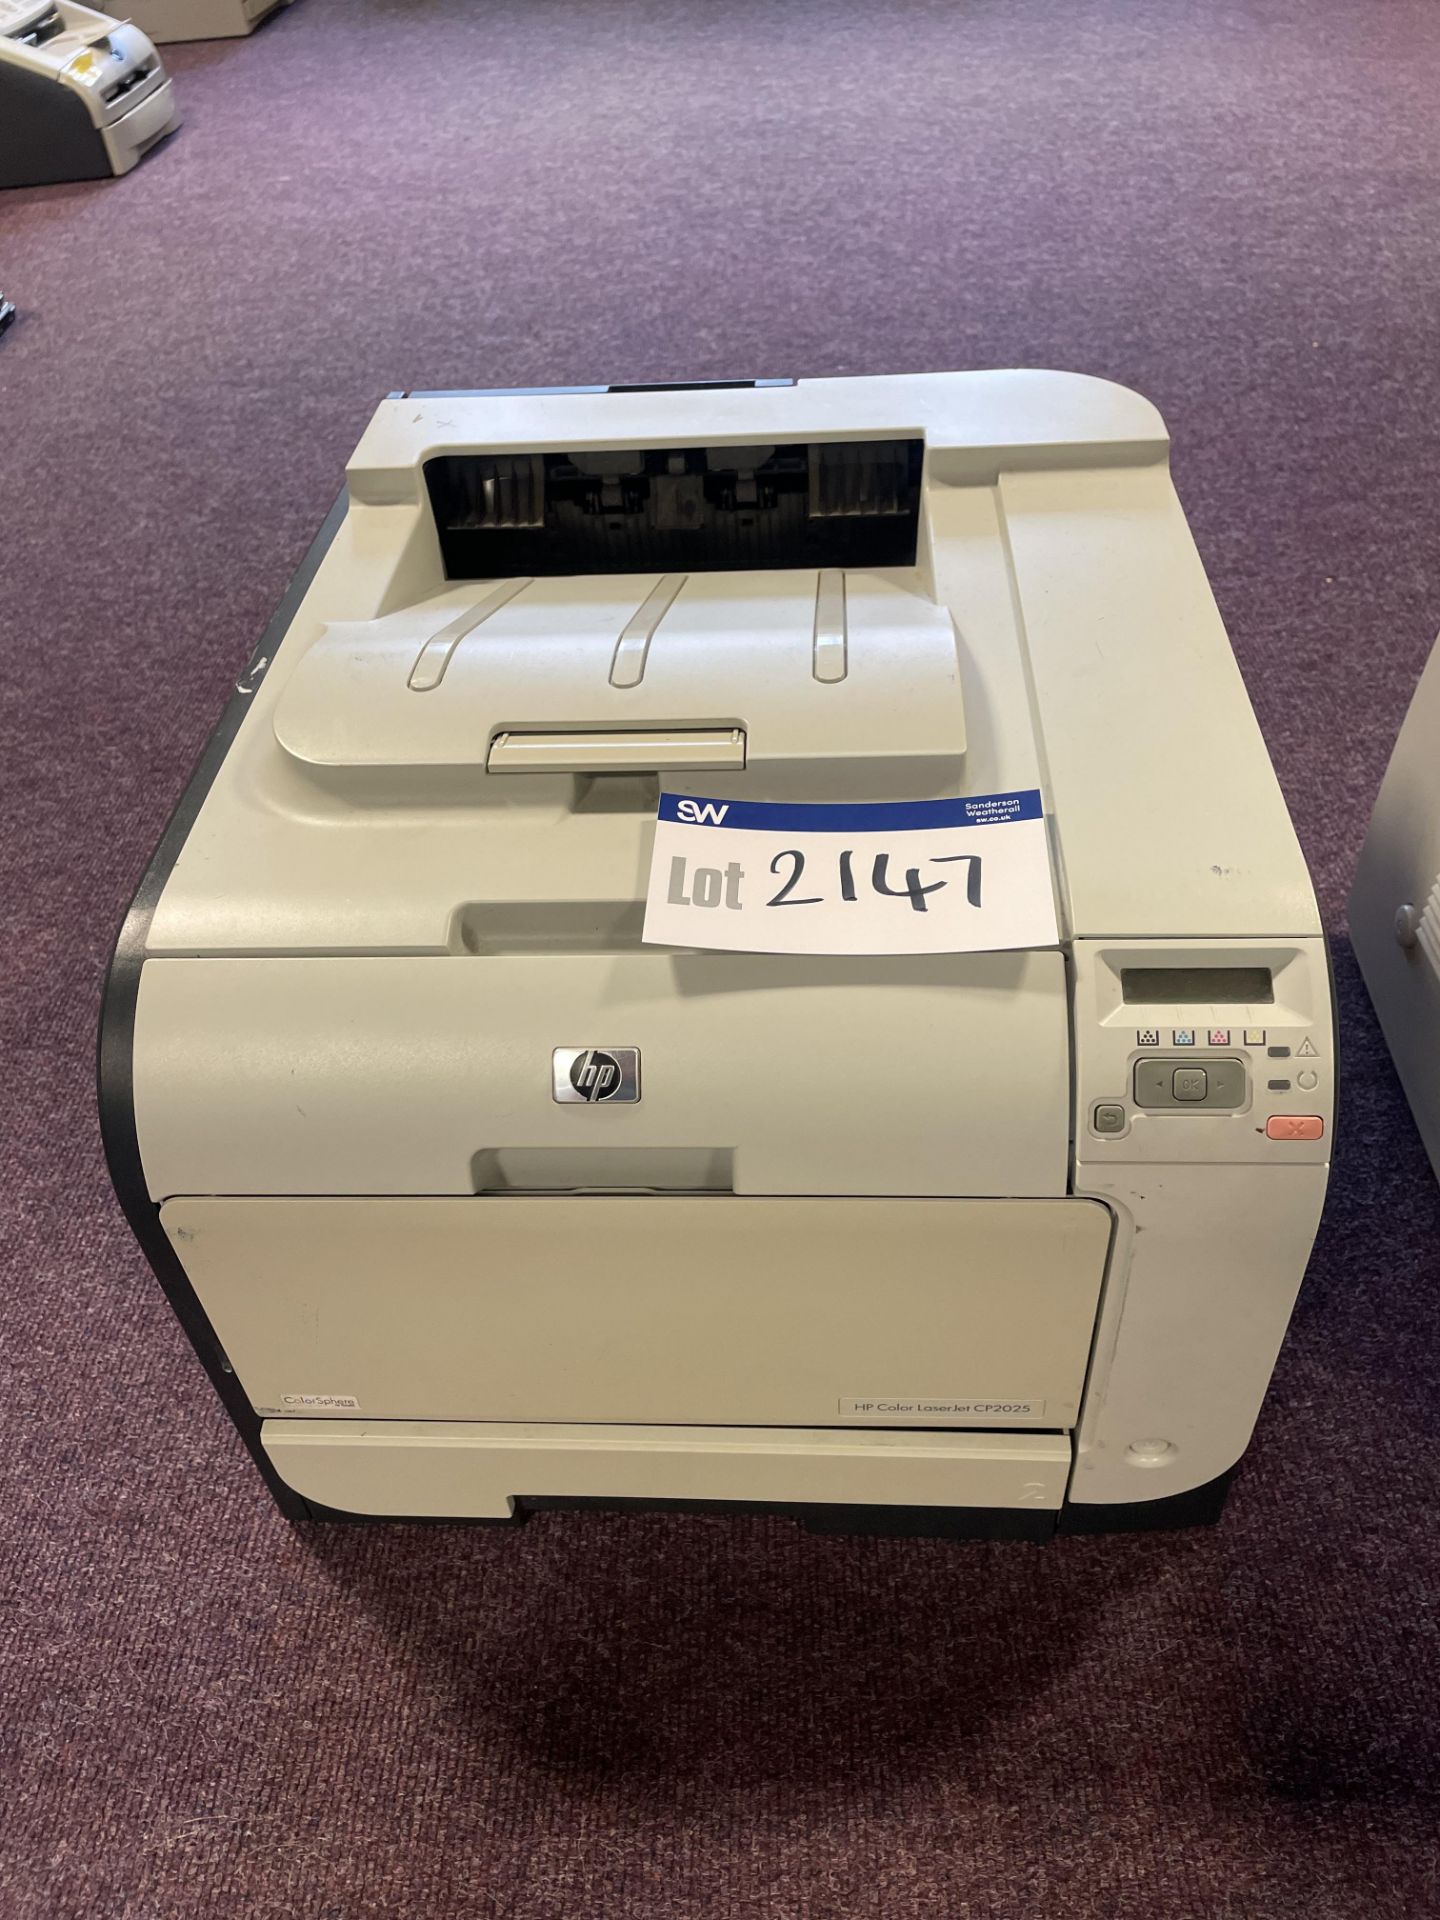 HP Color LaserJet CP2025 Printer (Room 605) - Image 2 of 3